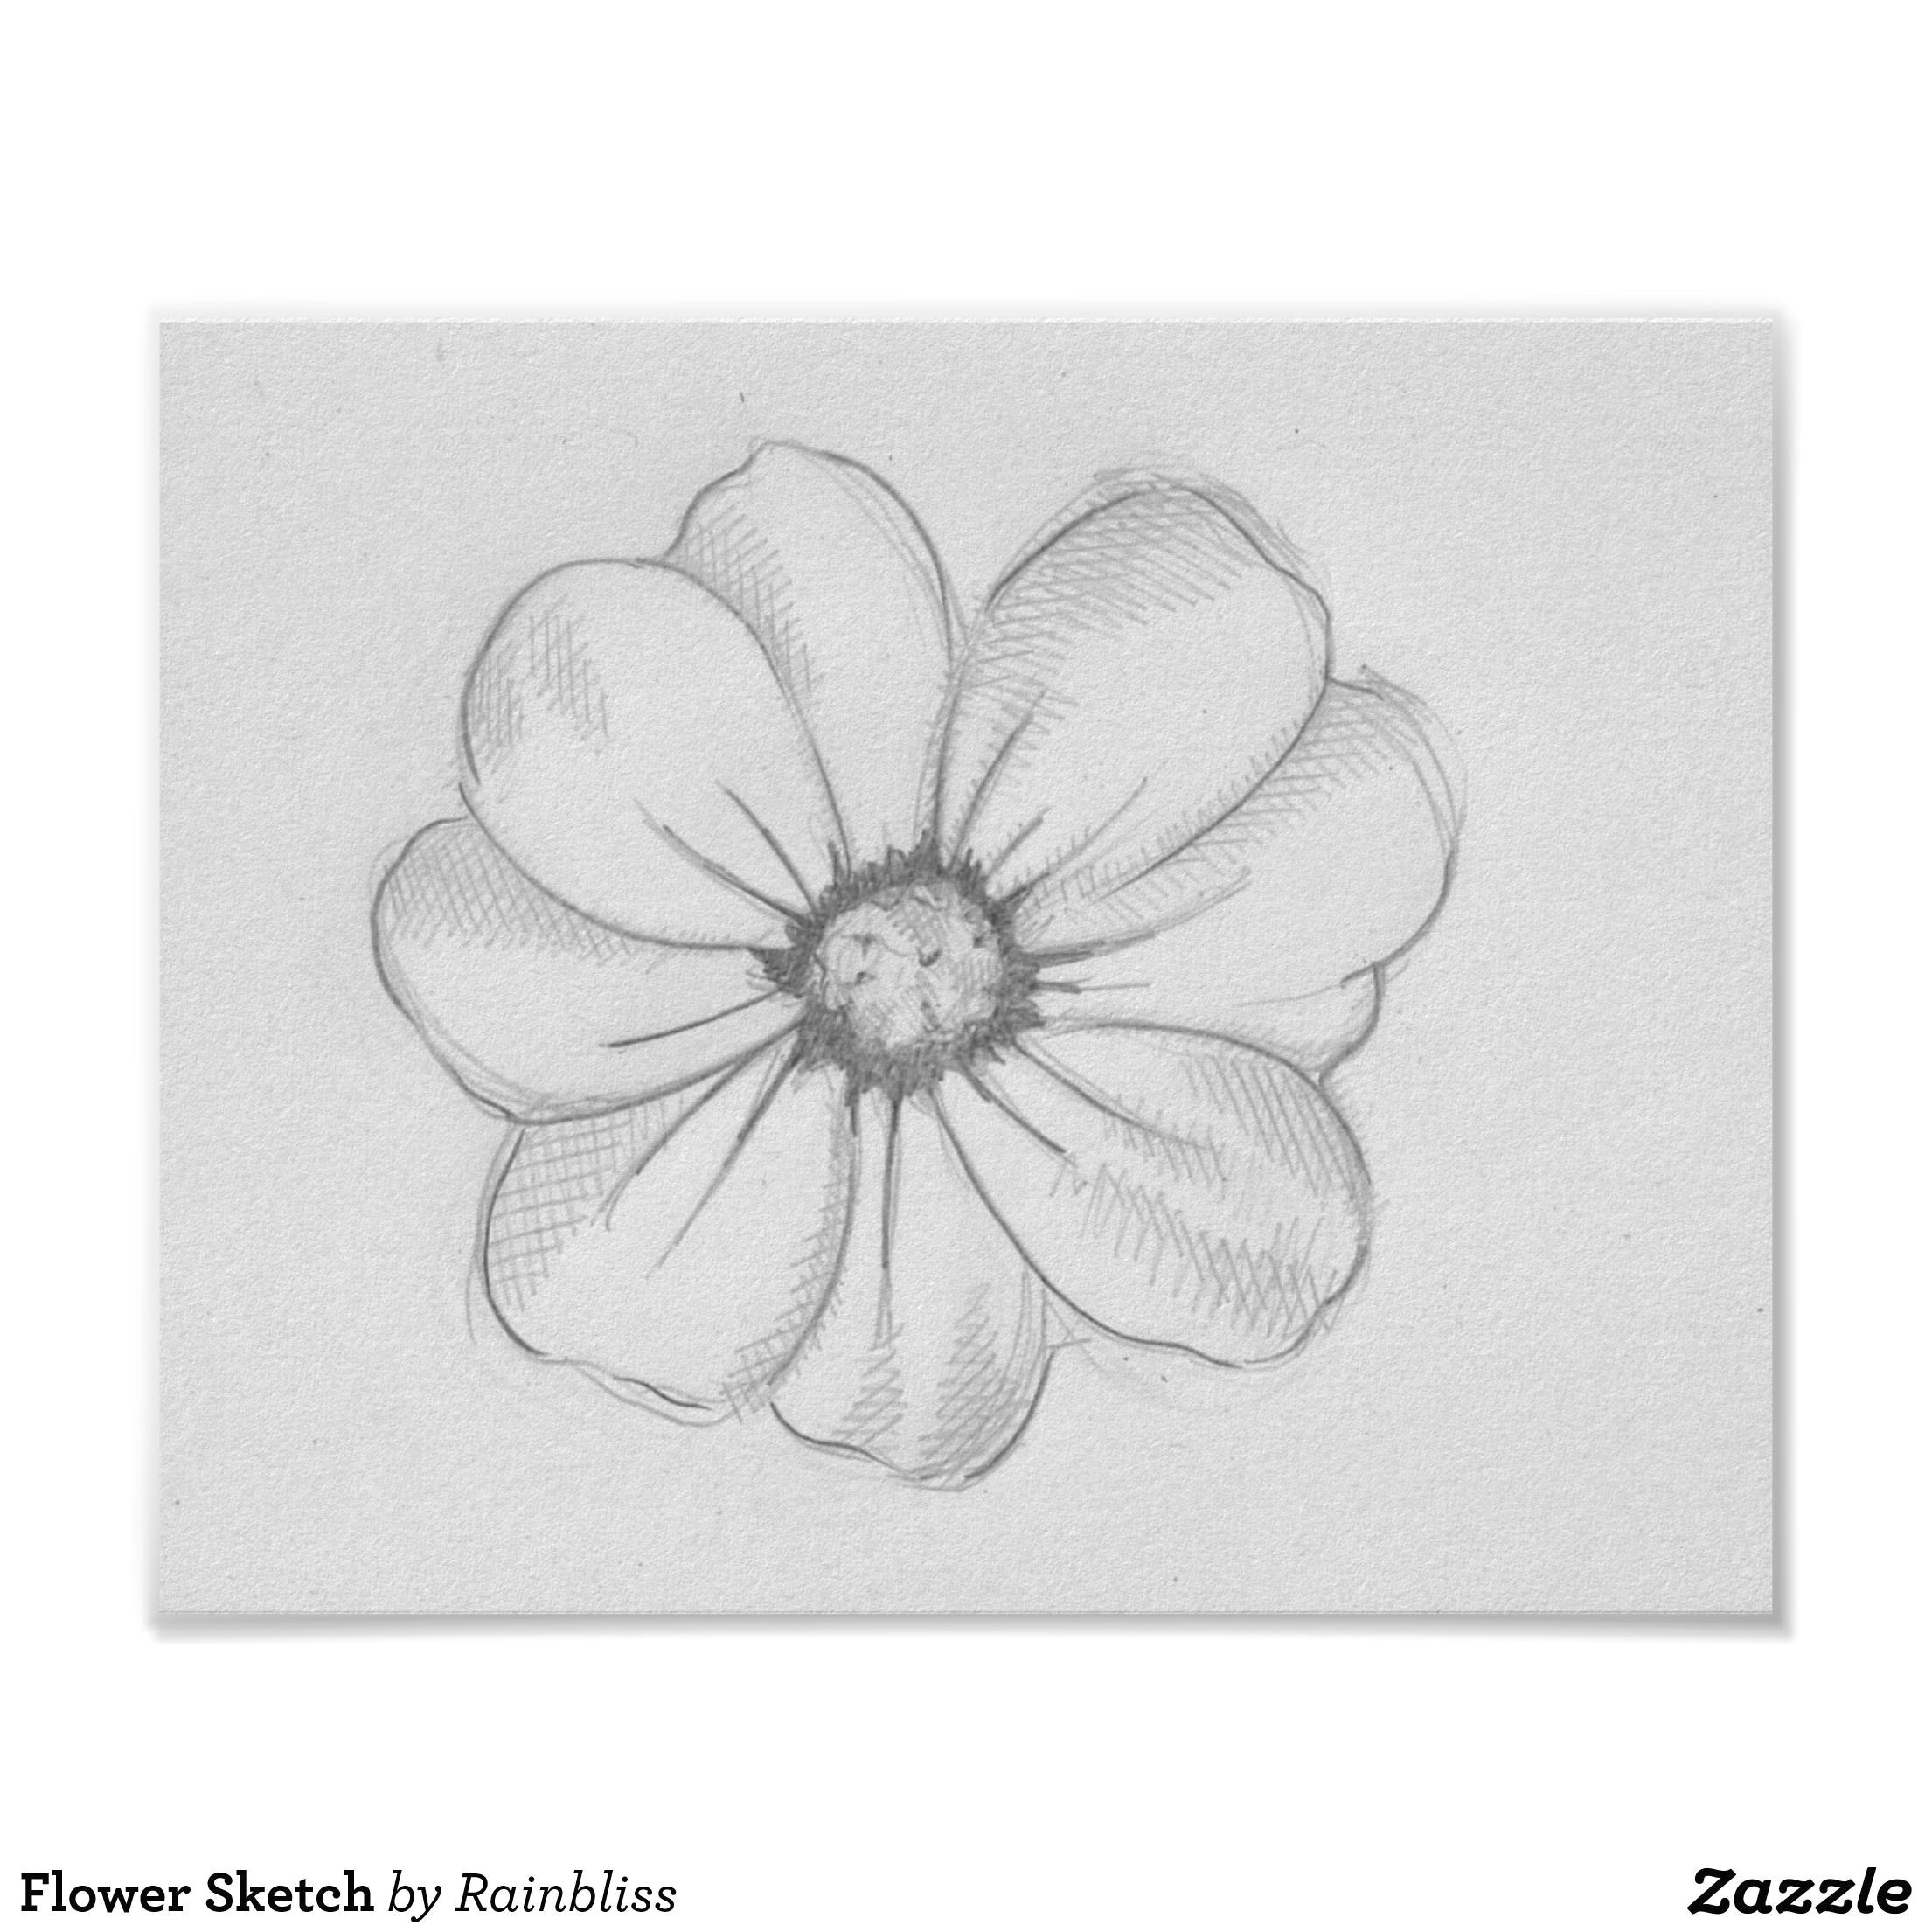 Drawings Of Flowers Realistic Flower Sketch Poster Flowers Roses Plants Drawings Pinterest